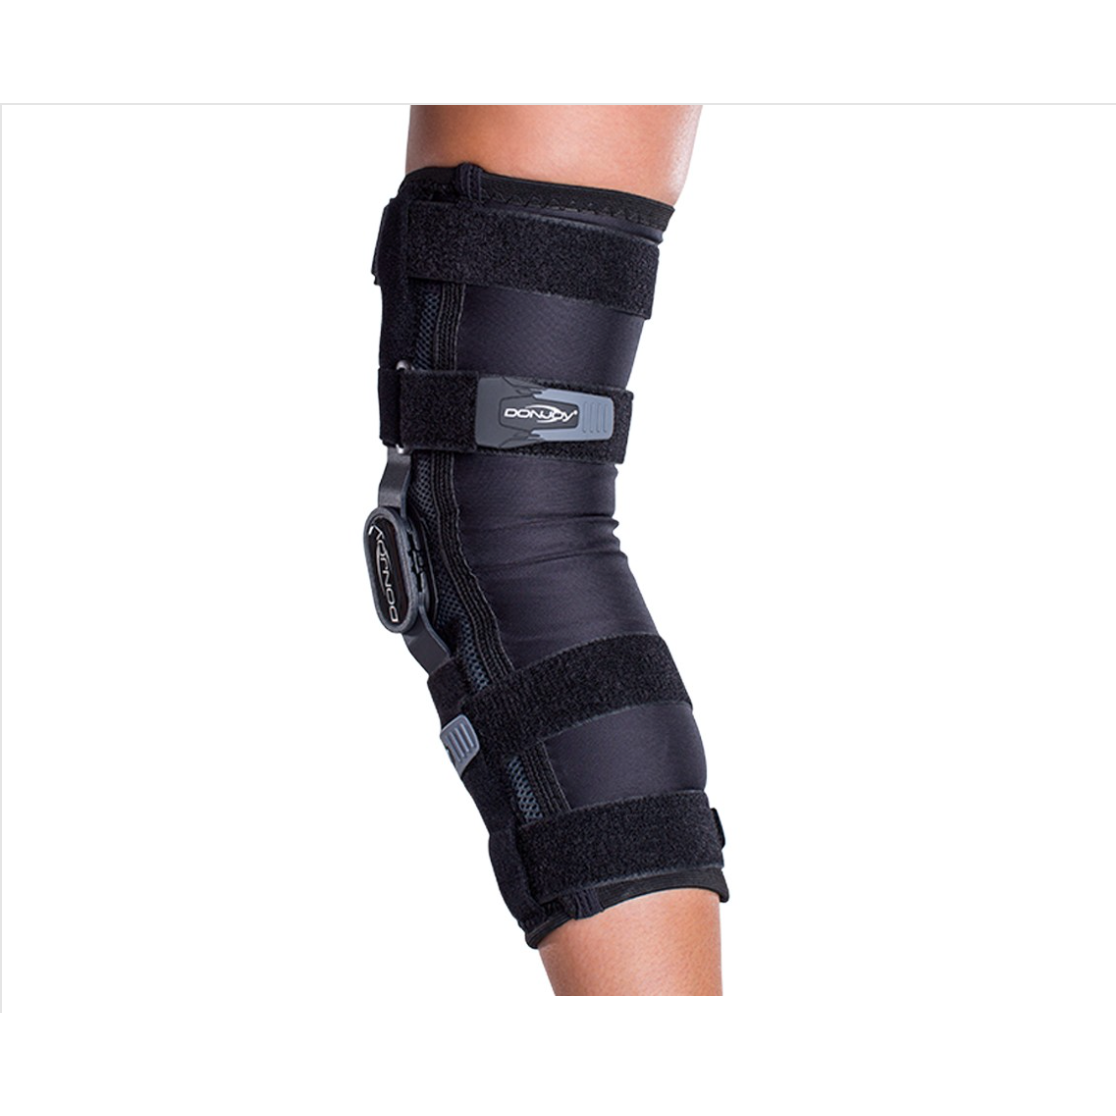 Wraparound Knee Braces for Mild to Moderate Pain